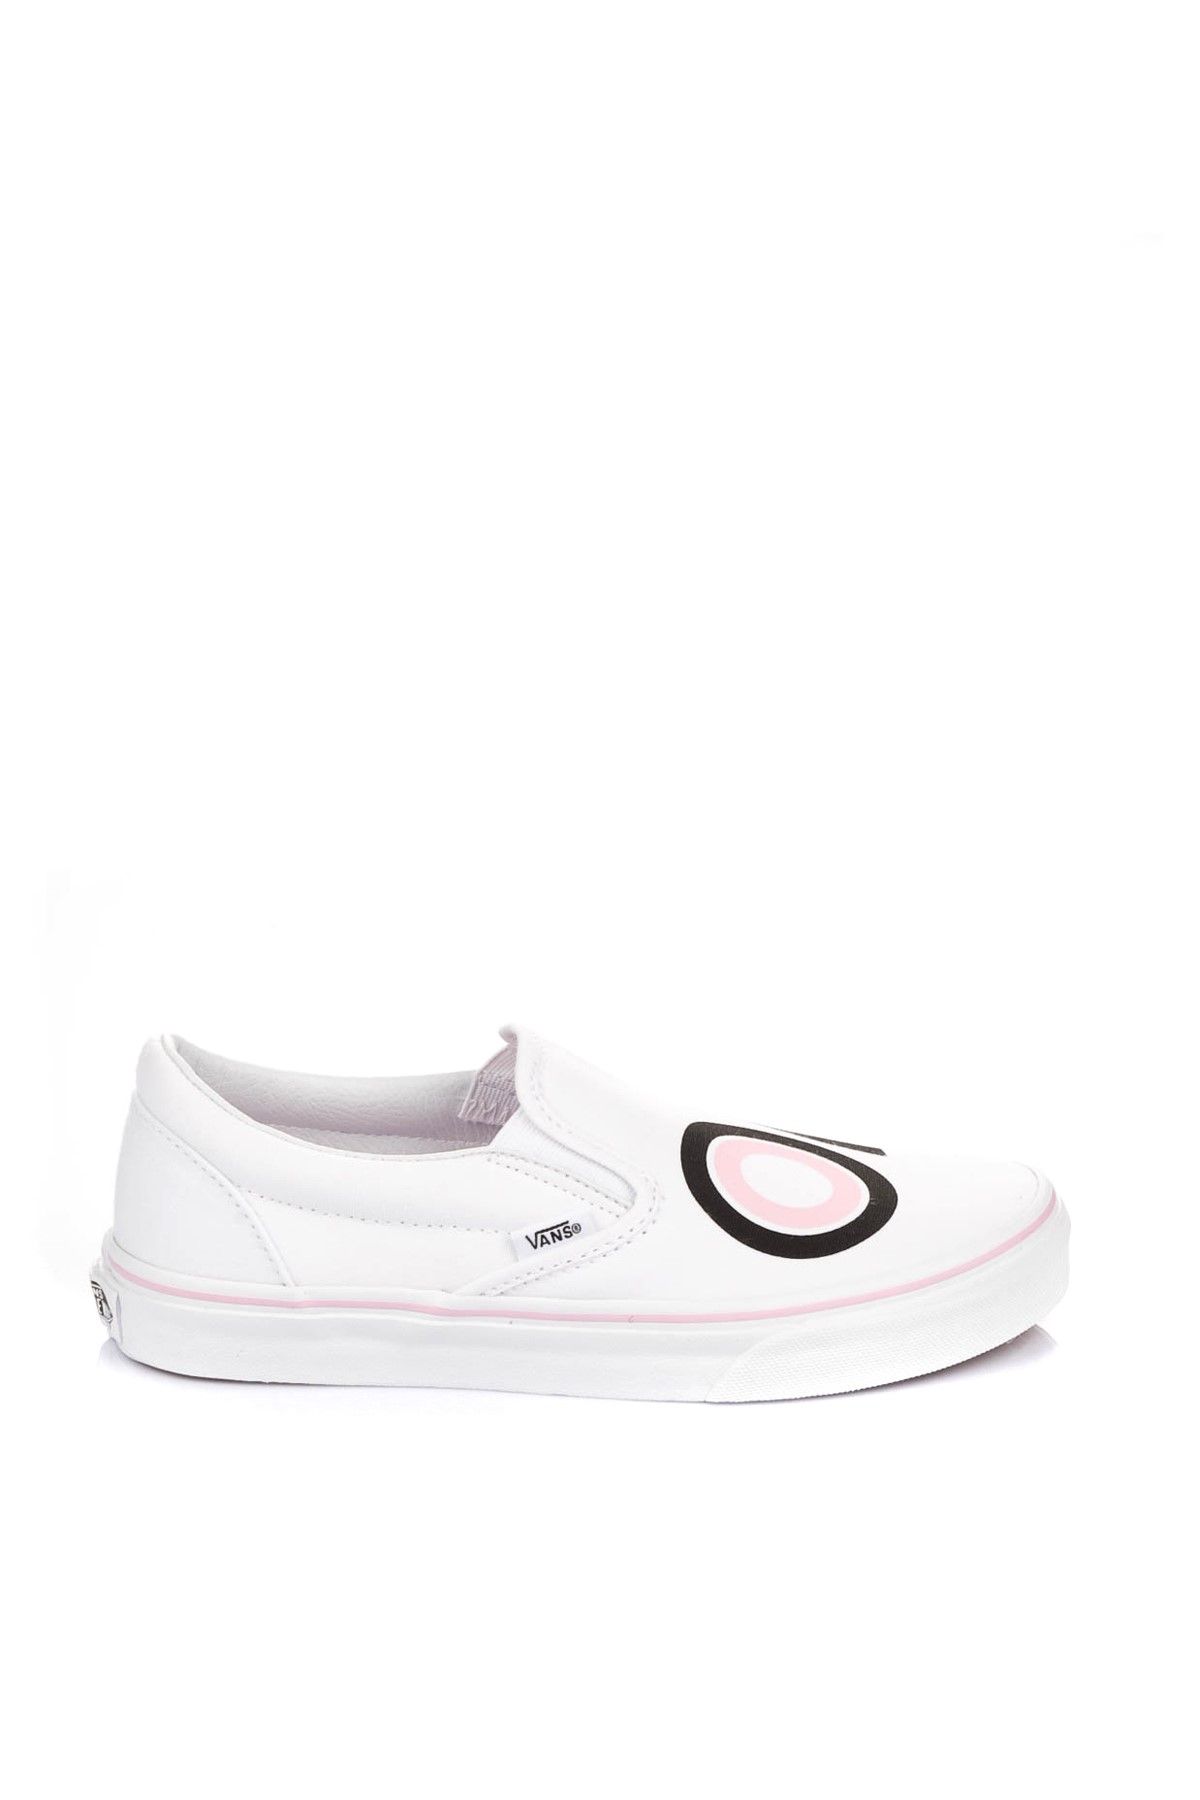 Vans UA CLASSIC SLIP-ON Beyaz PEMBE Kadın Sneaker 100290795